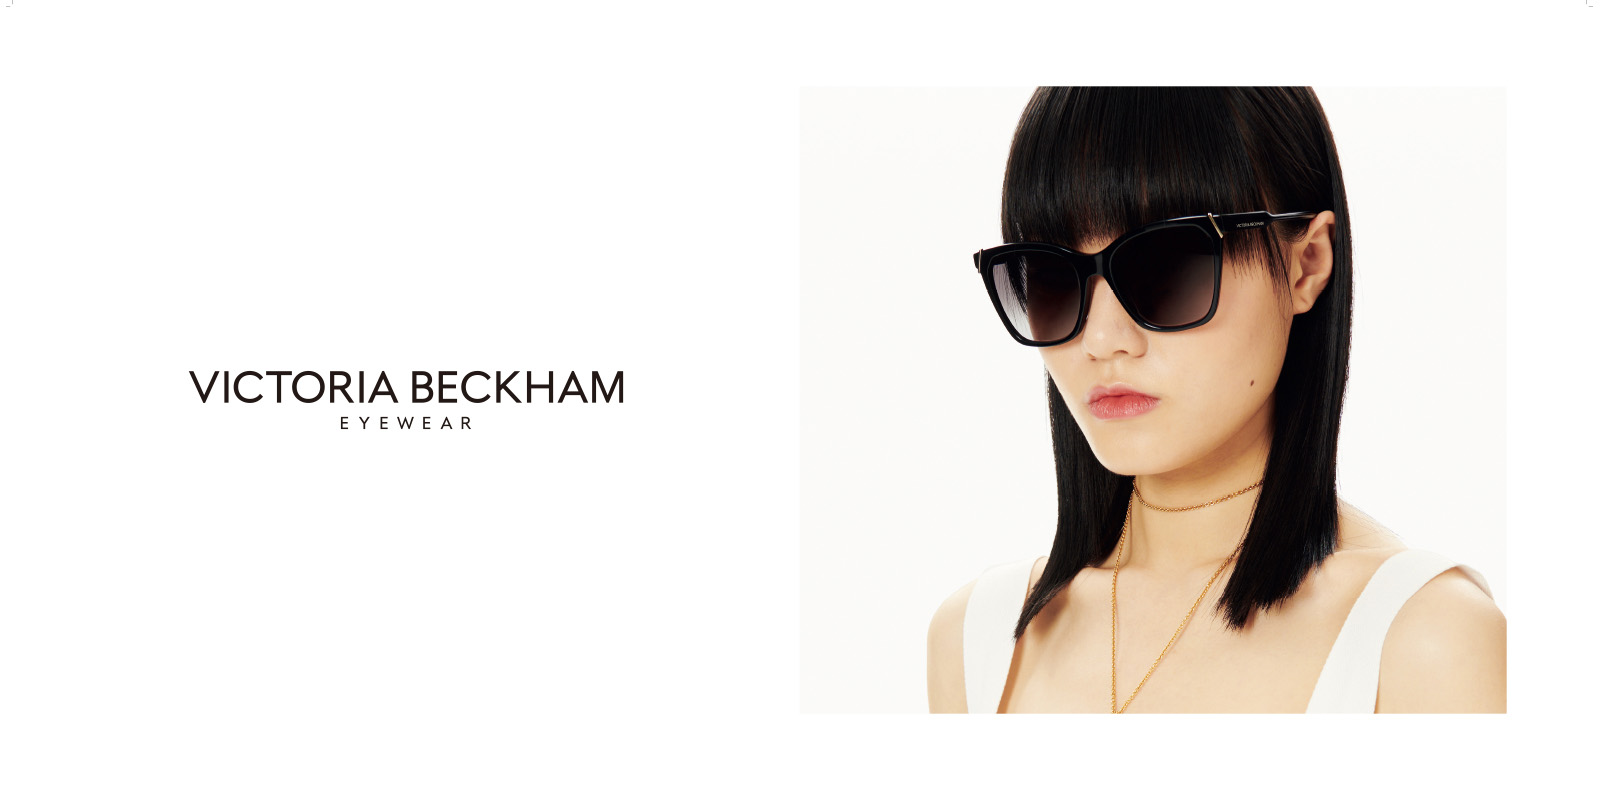 VICTORIA BECKHAM - Sunglasses and Glasses | Puyi Optical